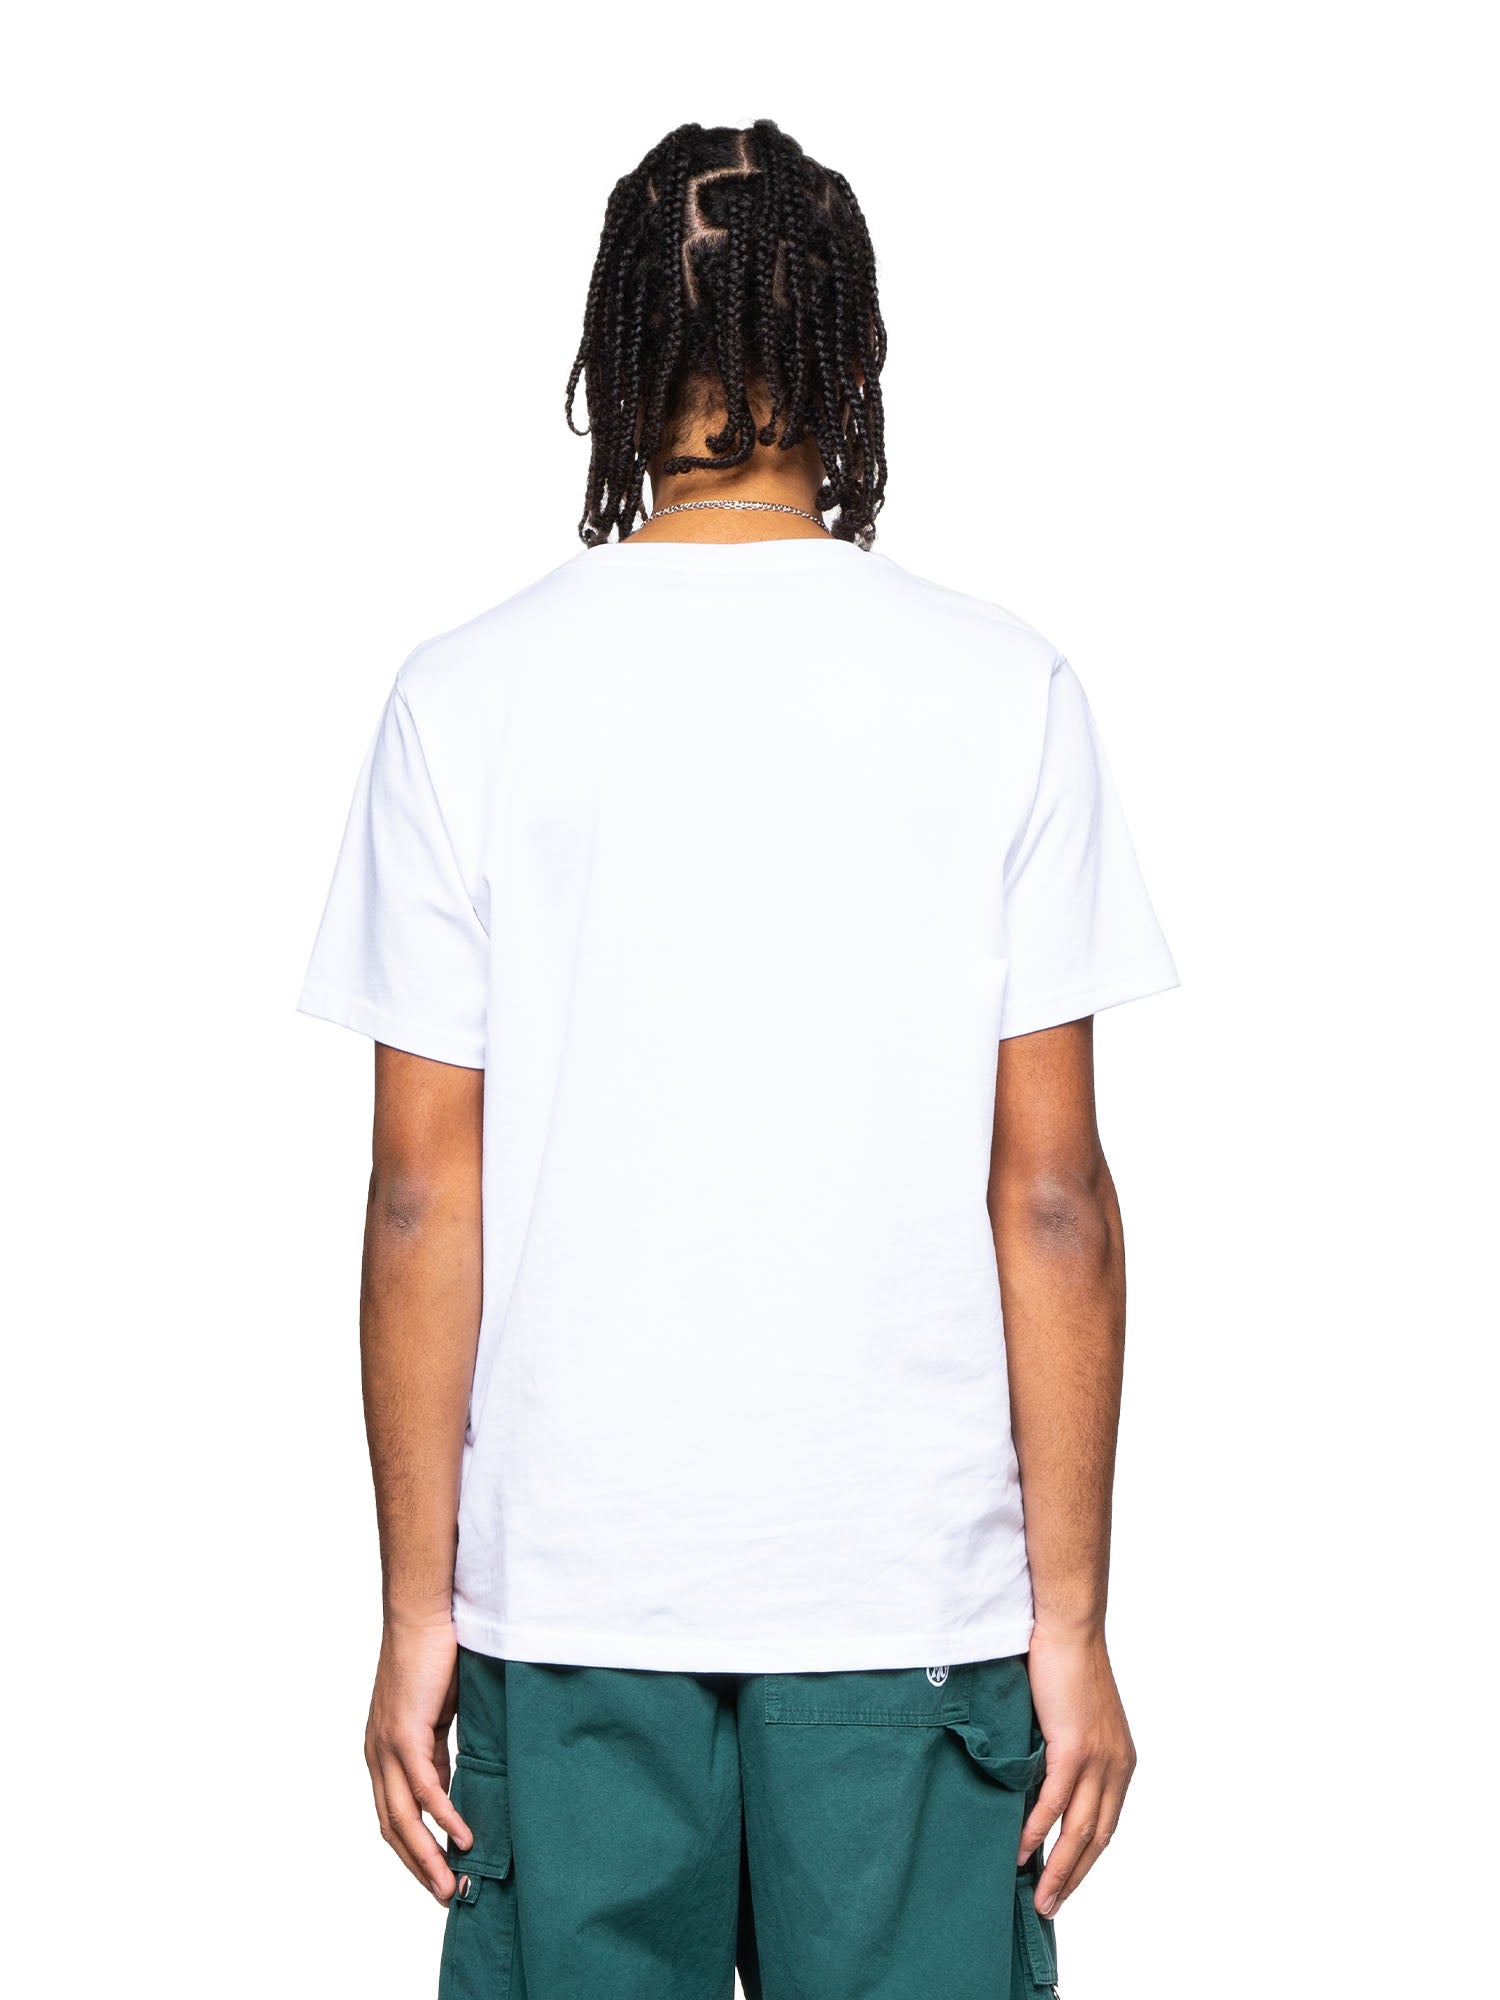 Blank T-Shirt - 1 Pack - White